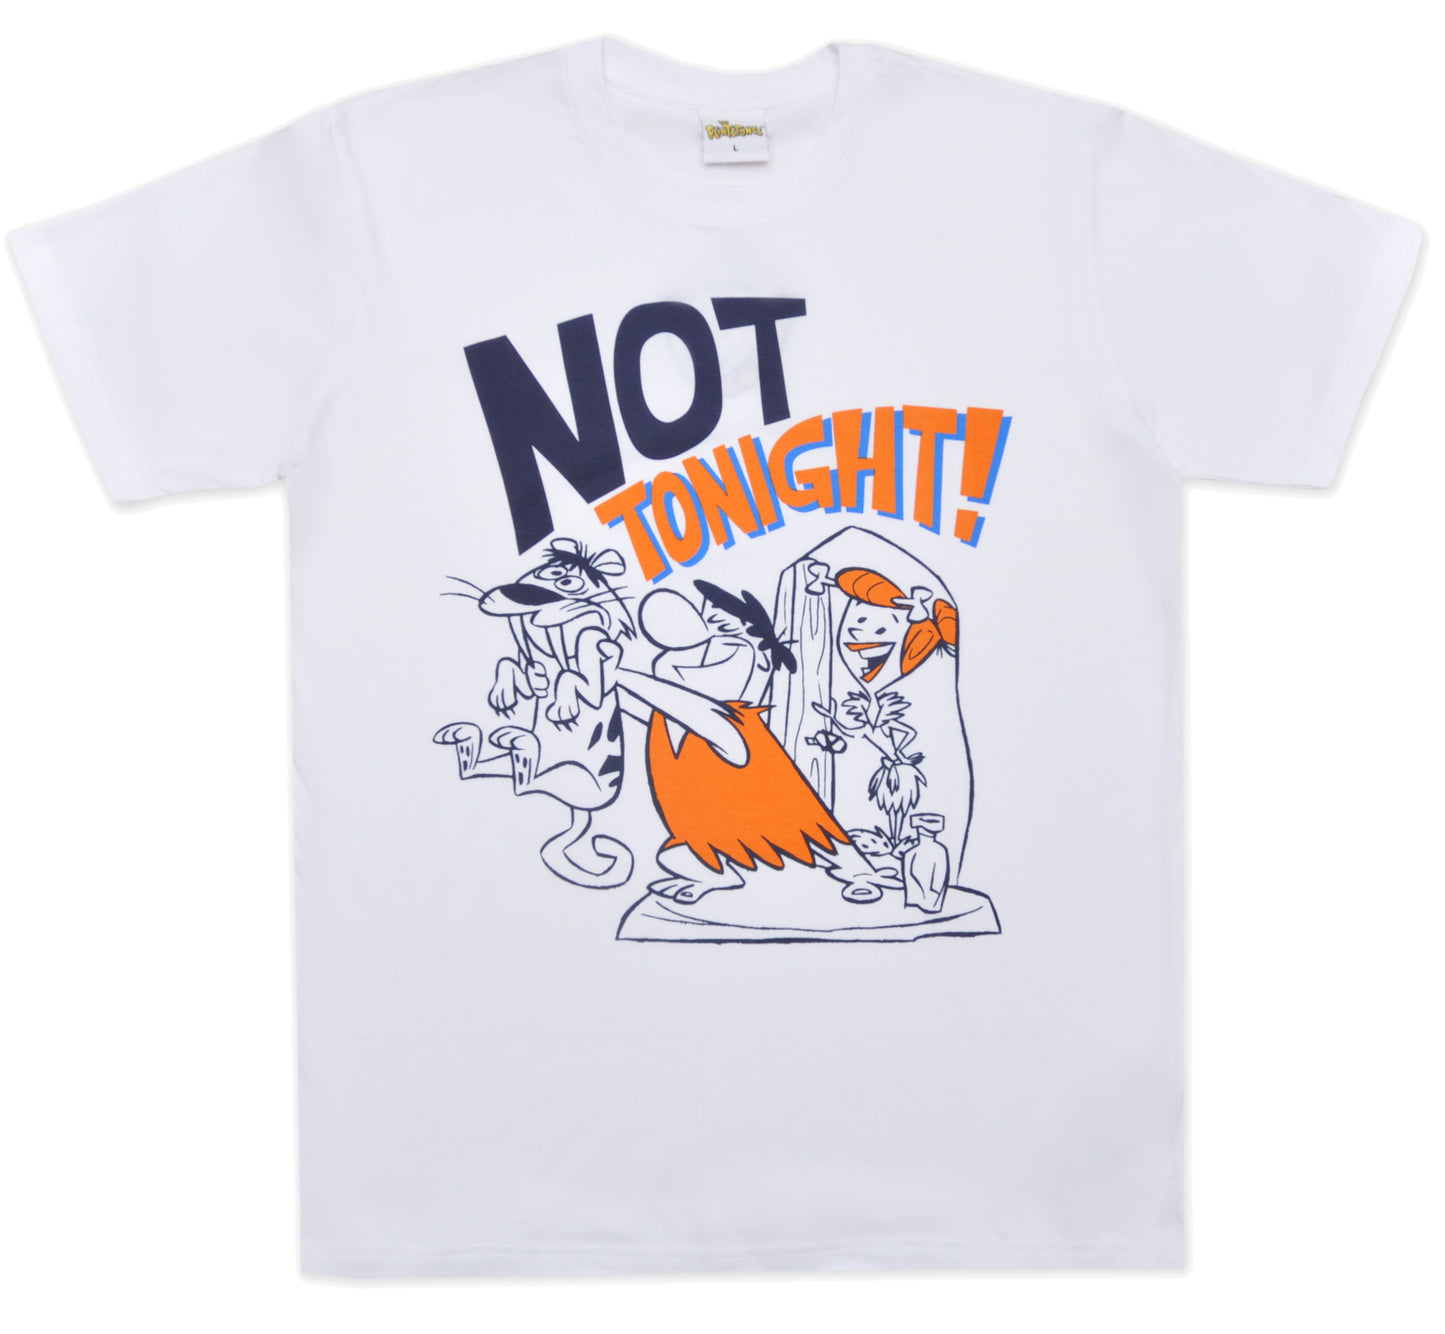 The Flintstones Men's Short Sleeve T-shirt Top gift for Husband Cotton